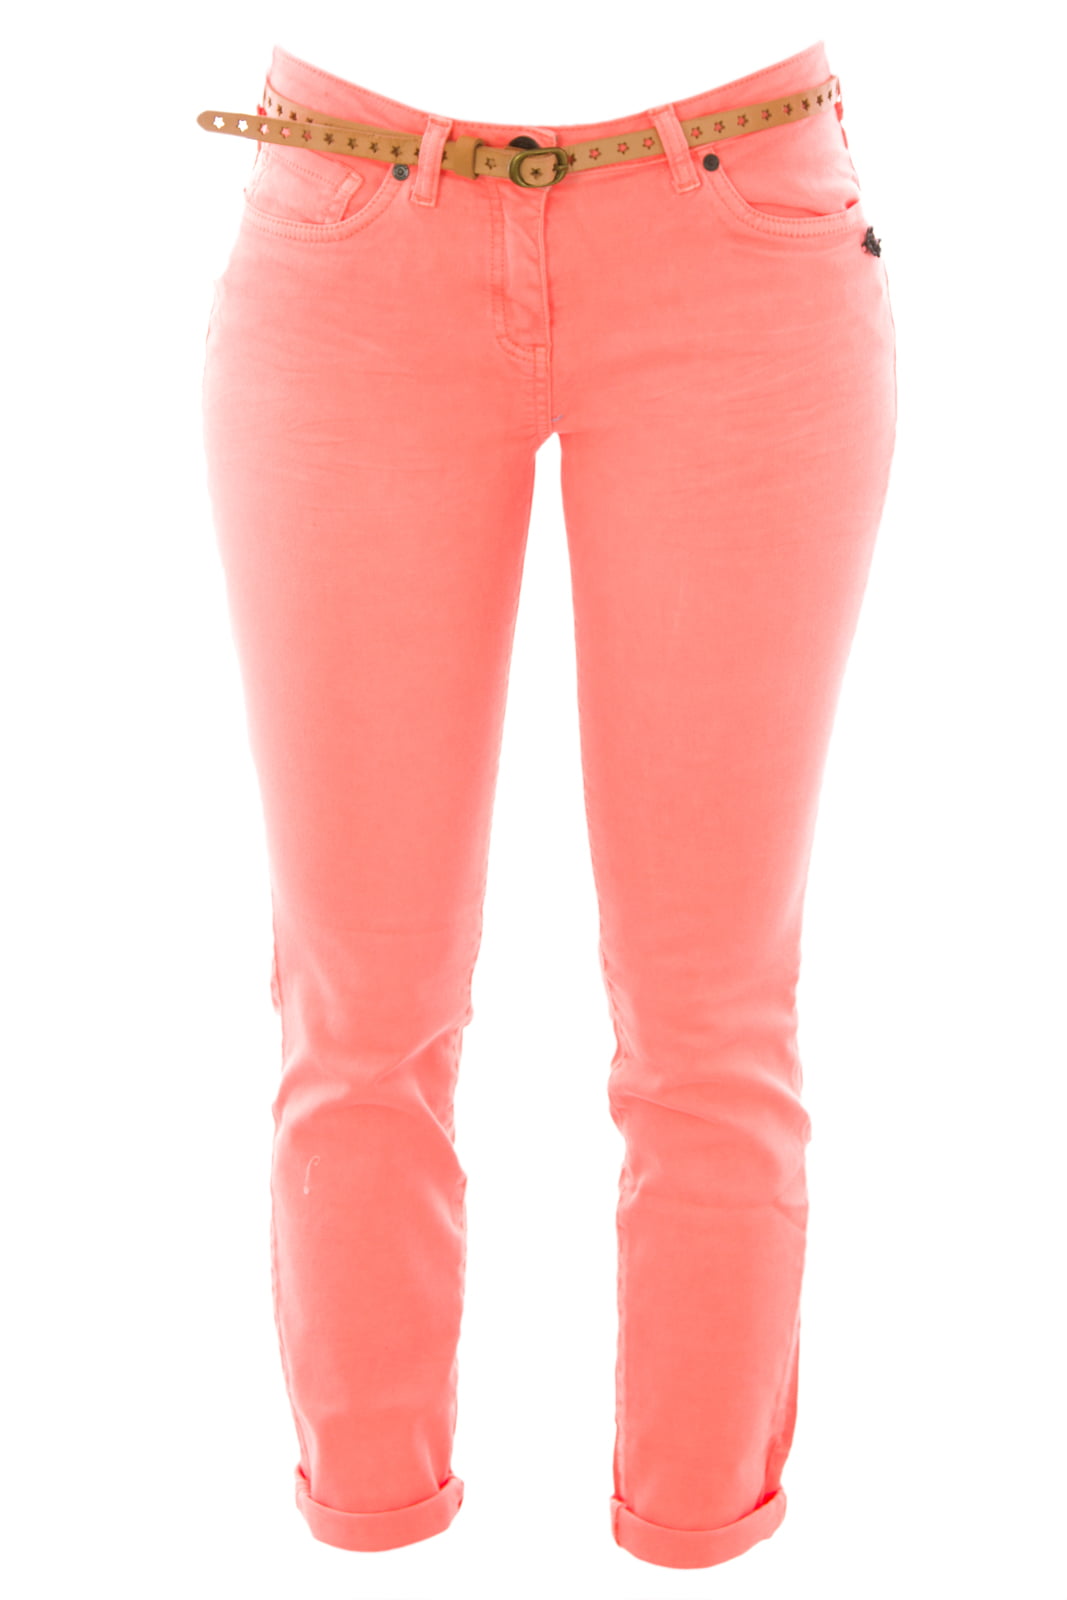 apotheker hart Reis Scotch & Soda Maison Scotch Women's Belted Skinny Jeans 24W x 32L  Fluorescent Coral - Walmart.com